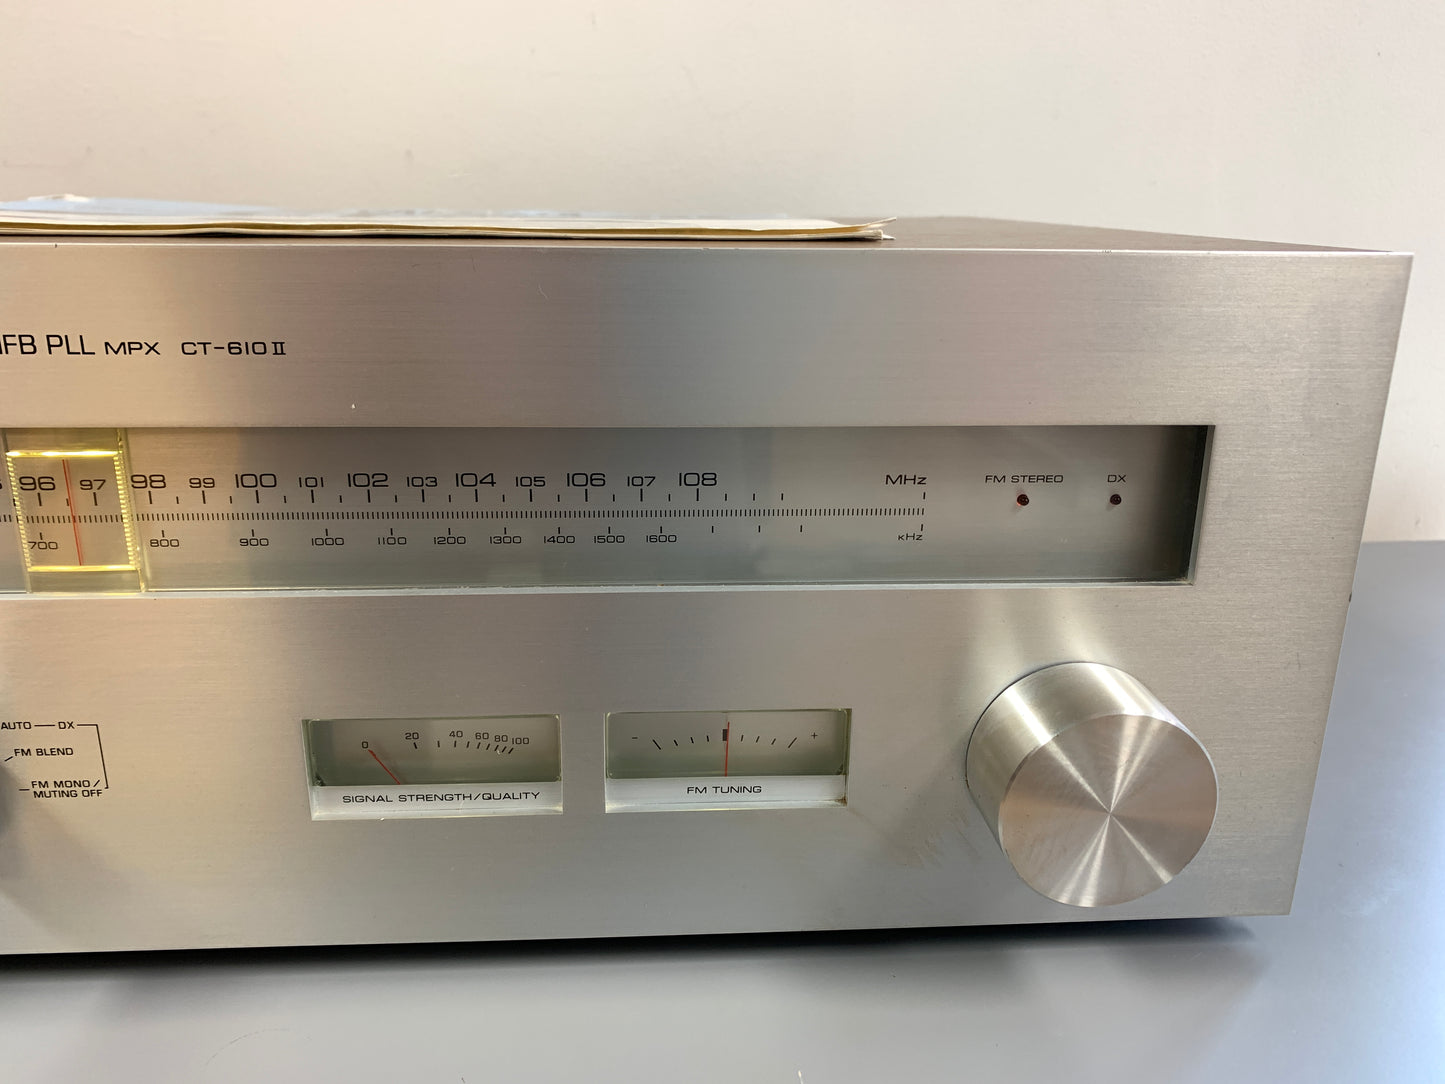 Yamaha CT-610II Stereo Tuner *Manual